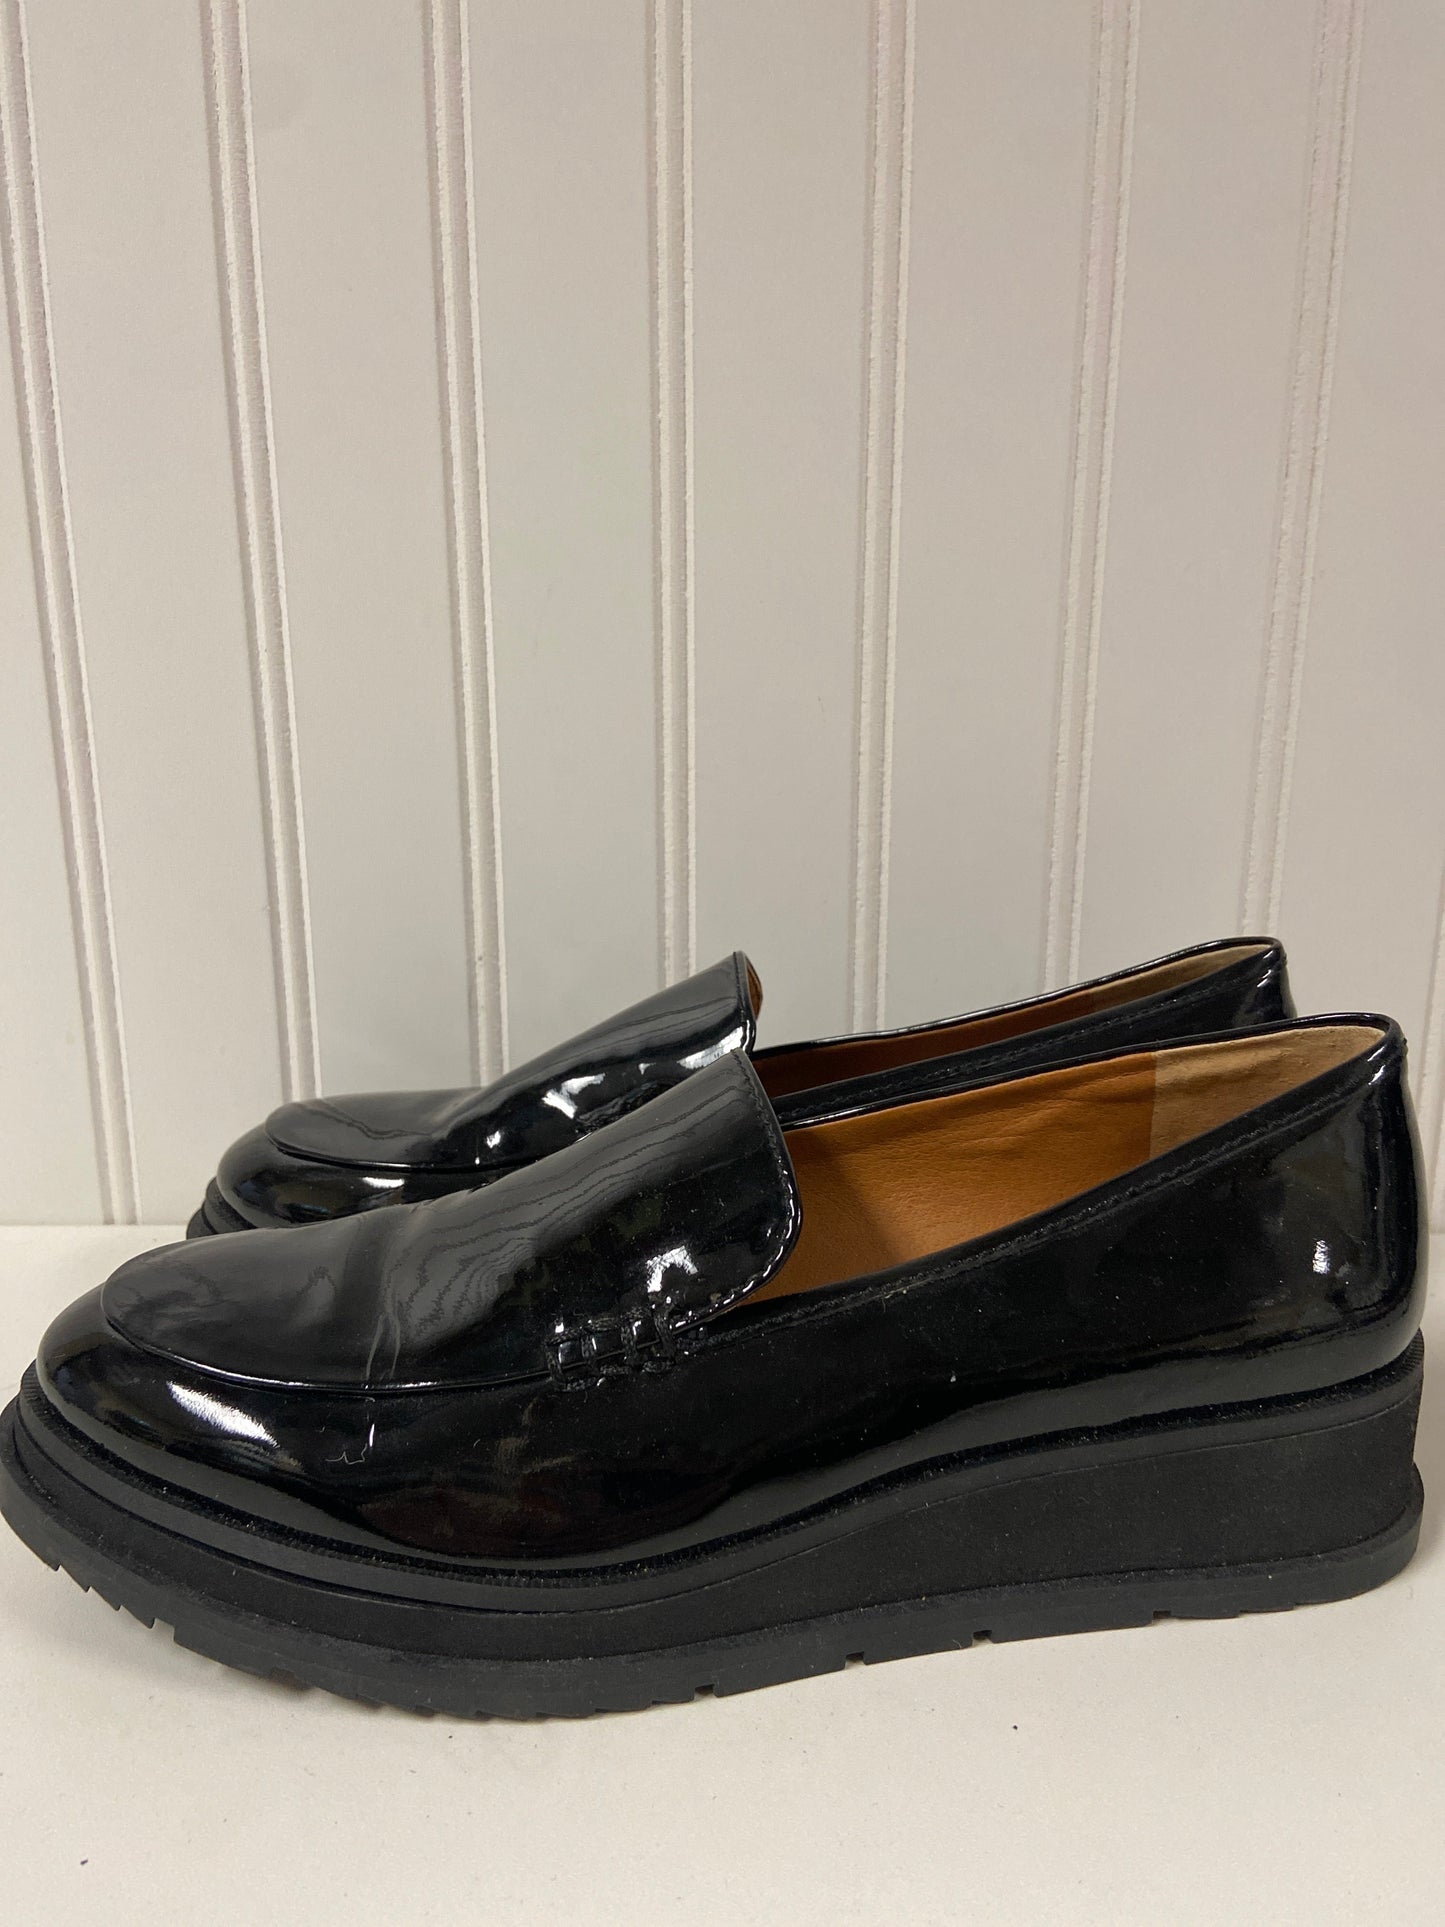 Black Shoes Flats Franco Sarto, Size 6.5